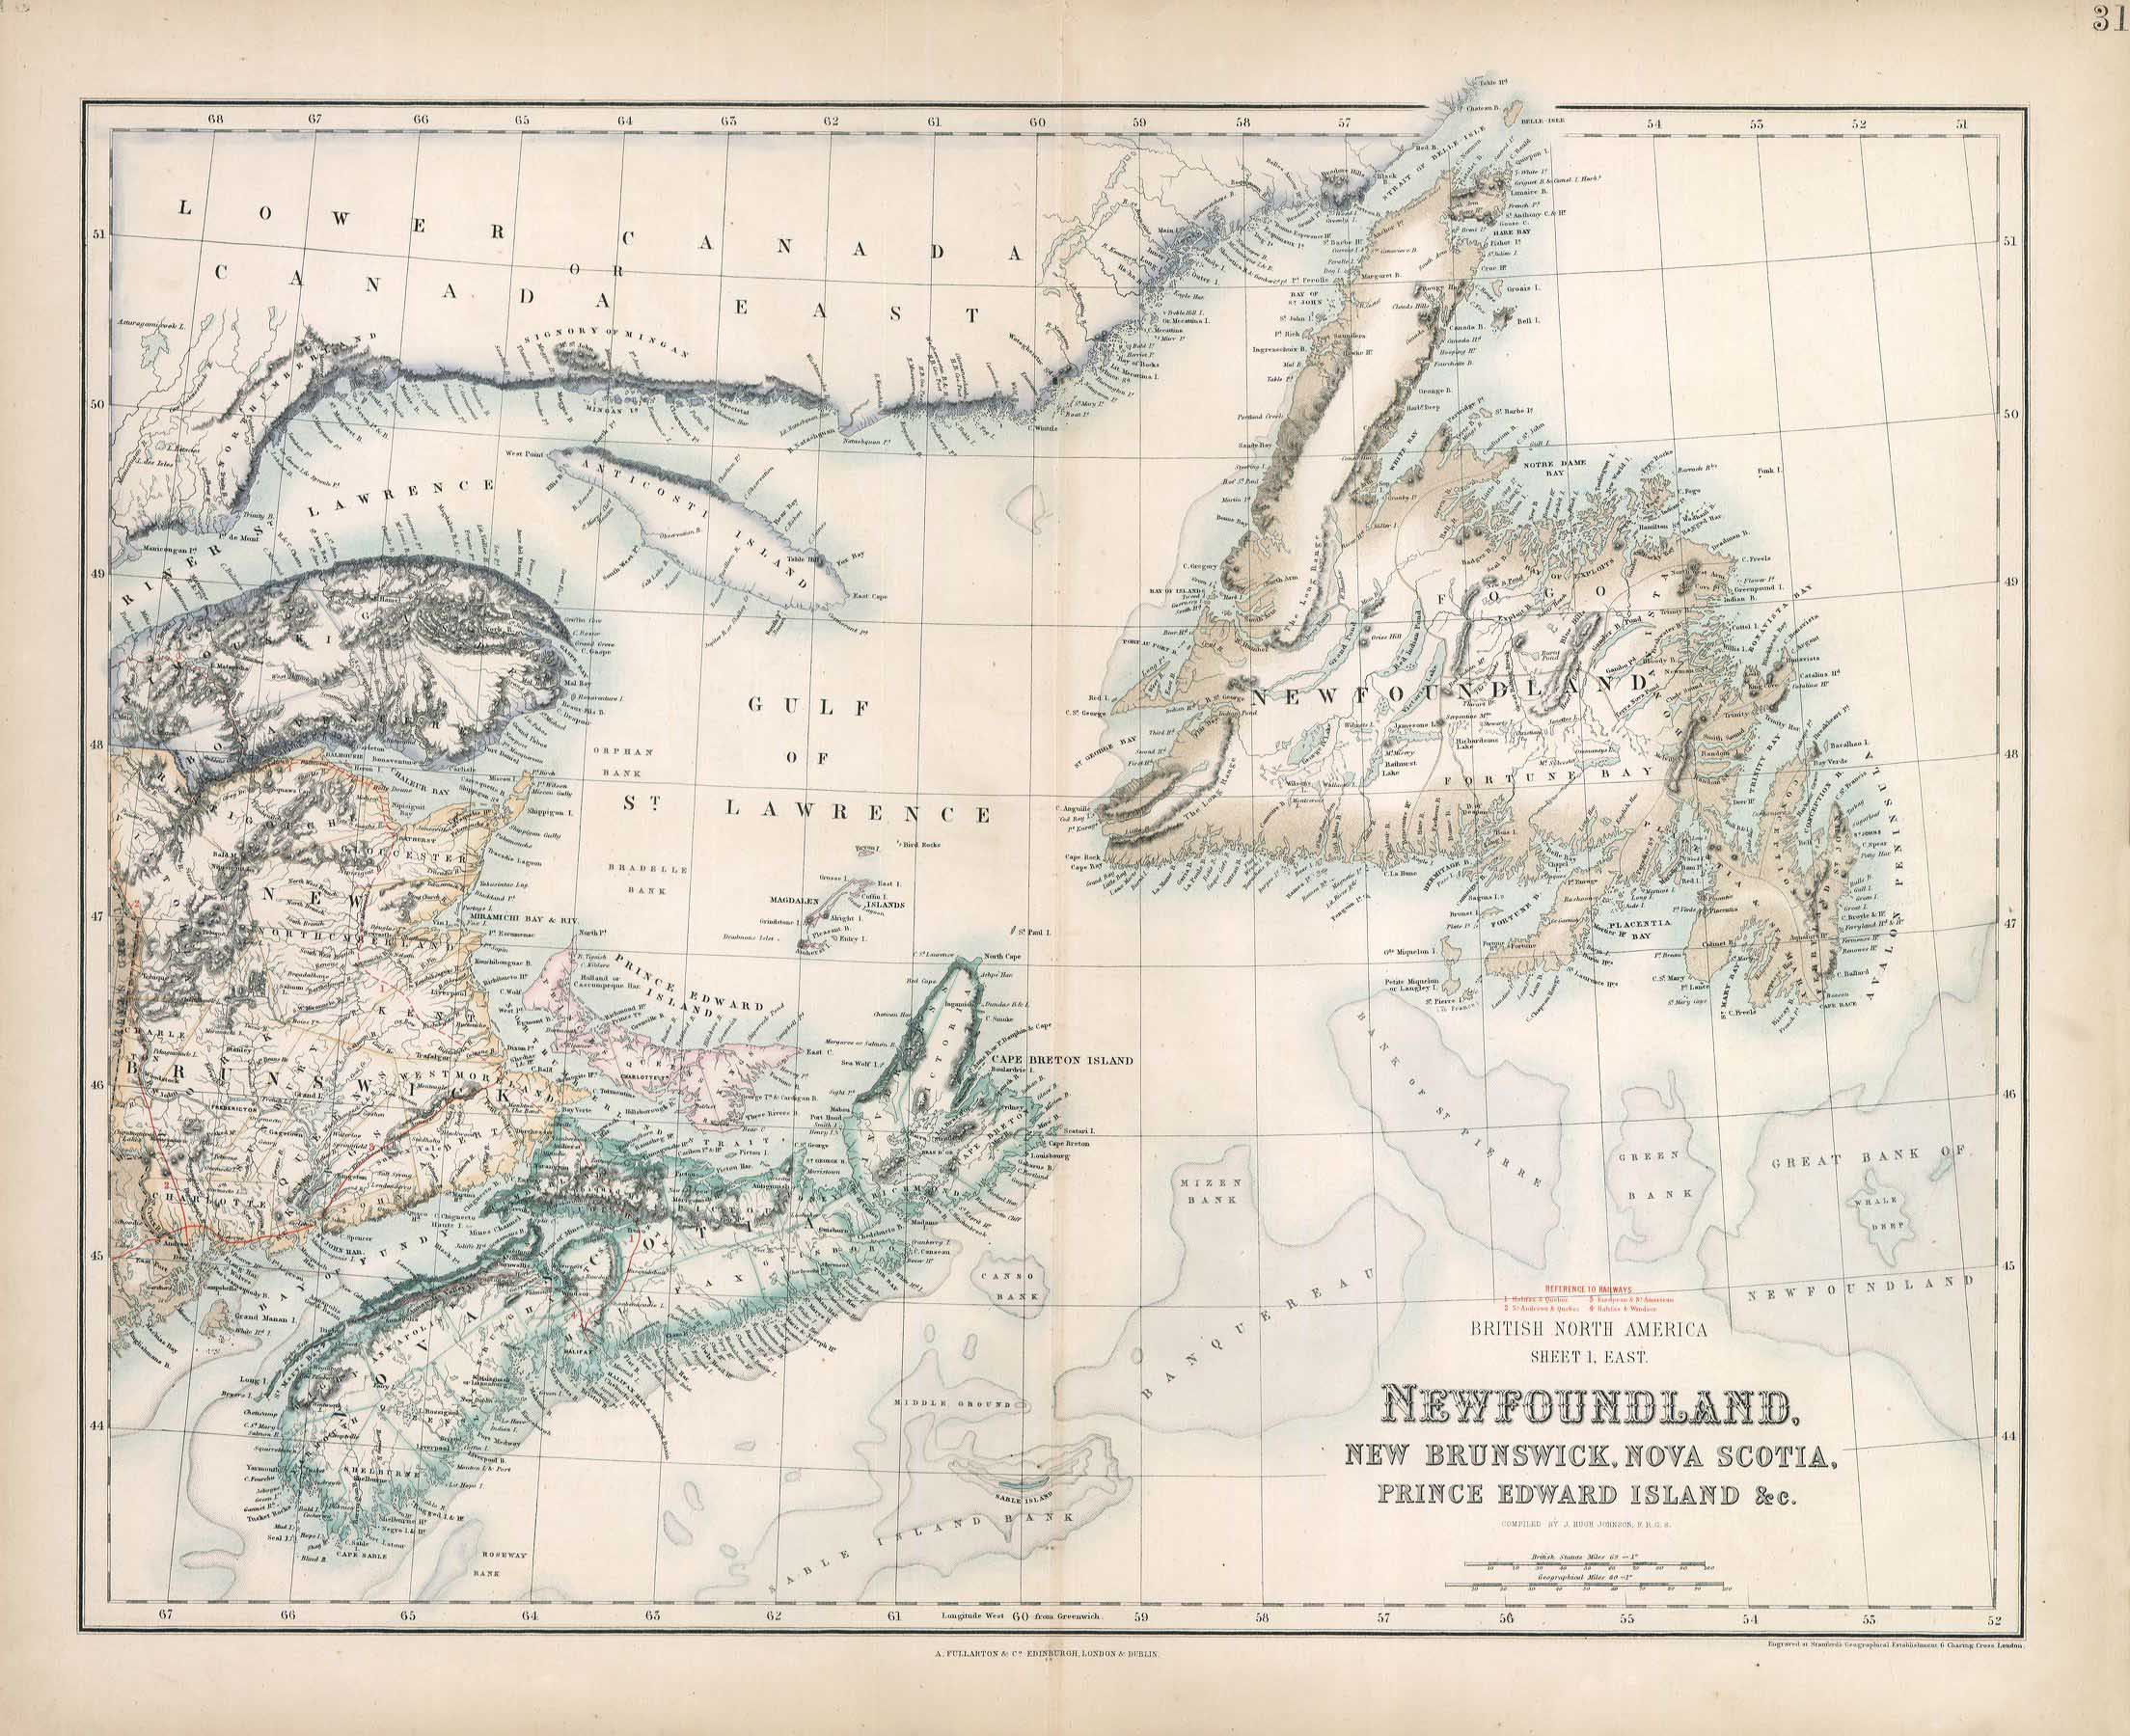 G2647 British North America, Sheet 1. East, 1874, Fullarton